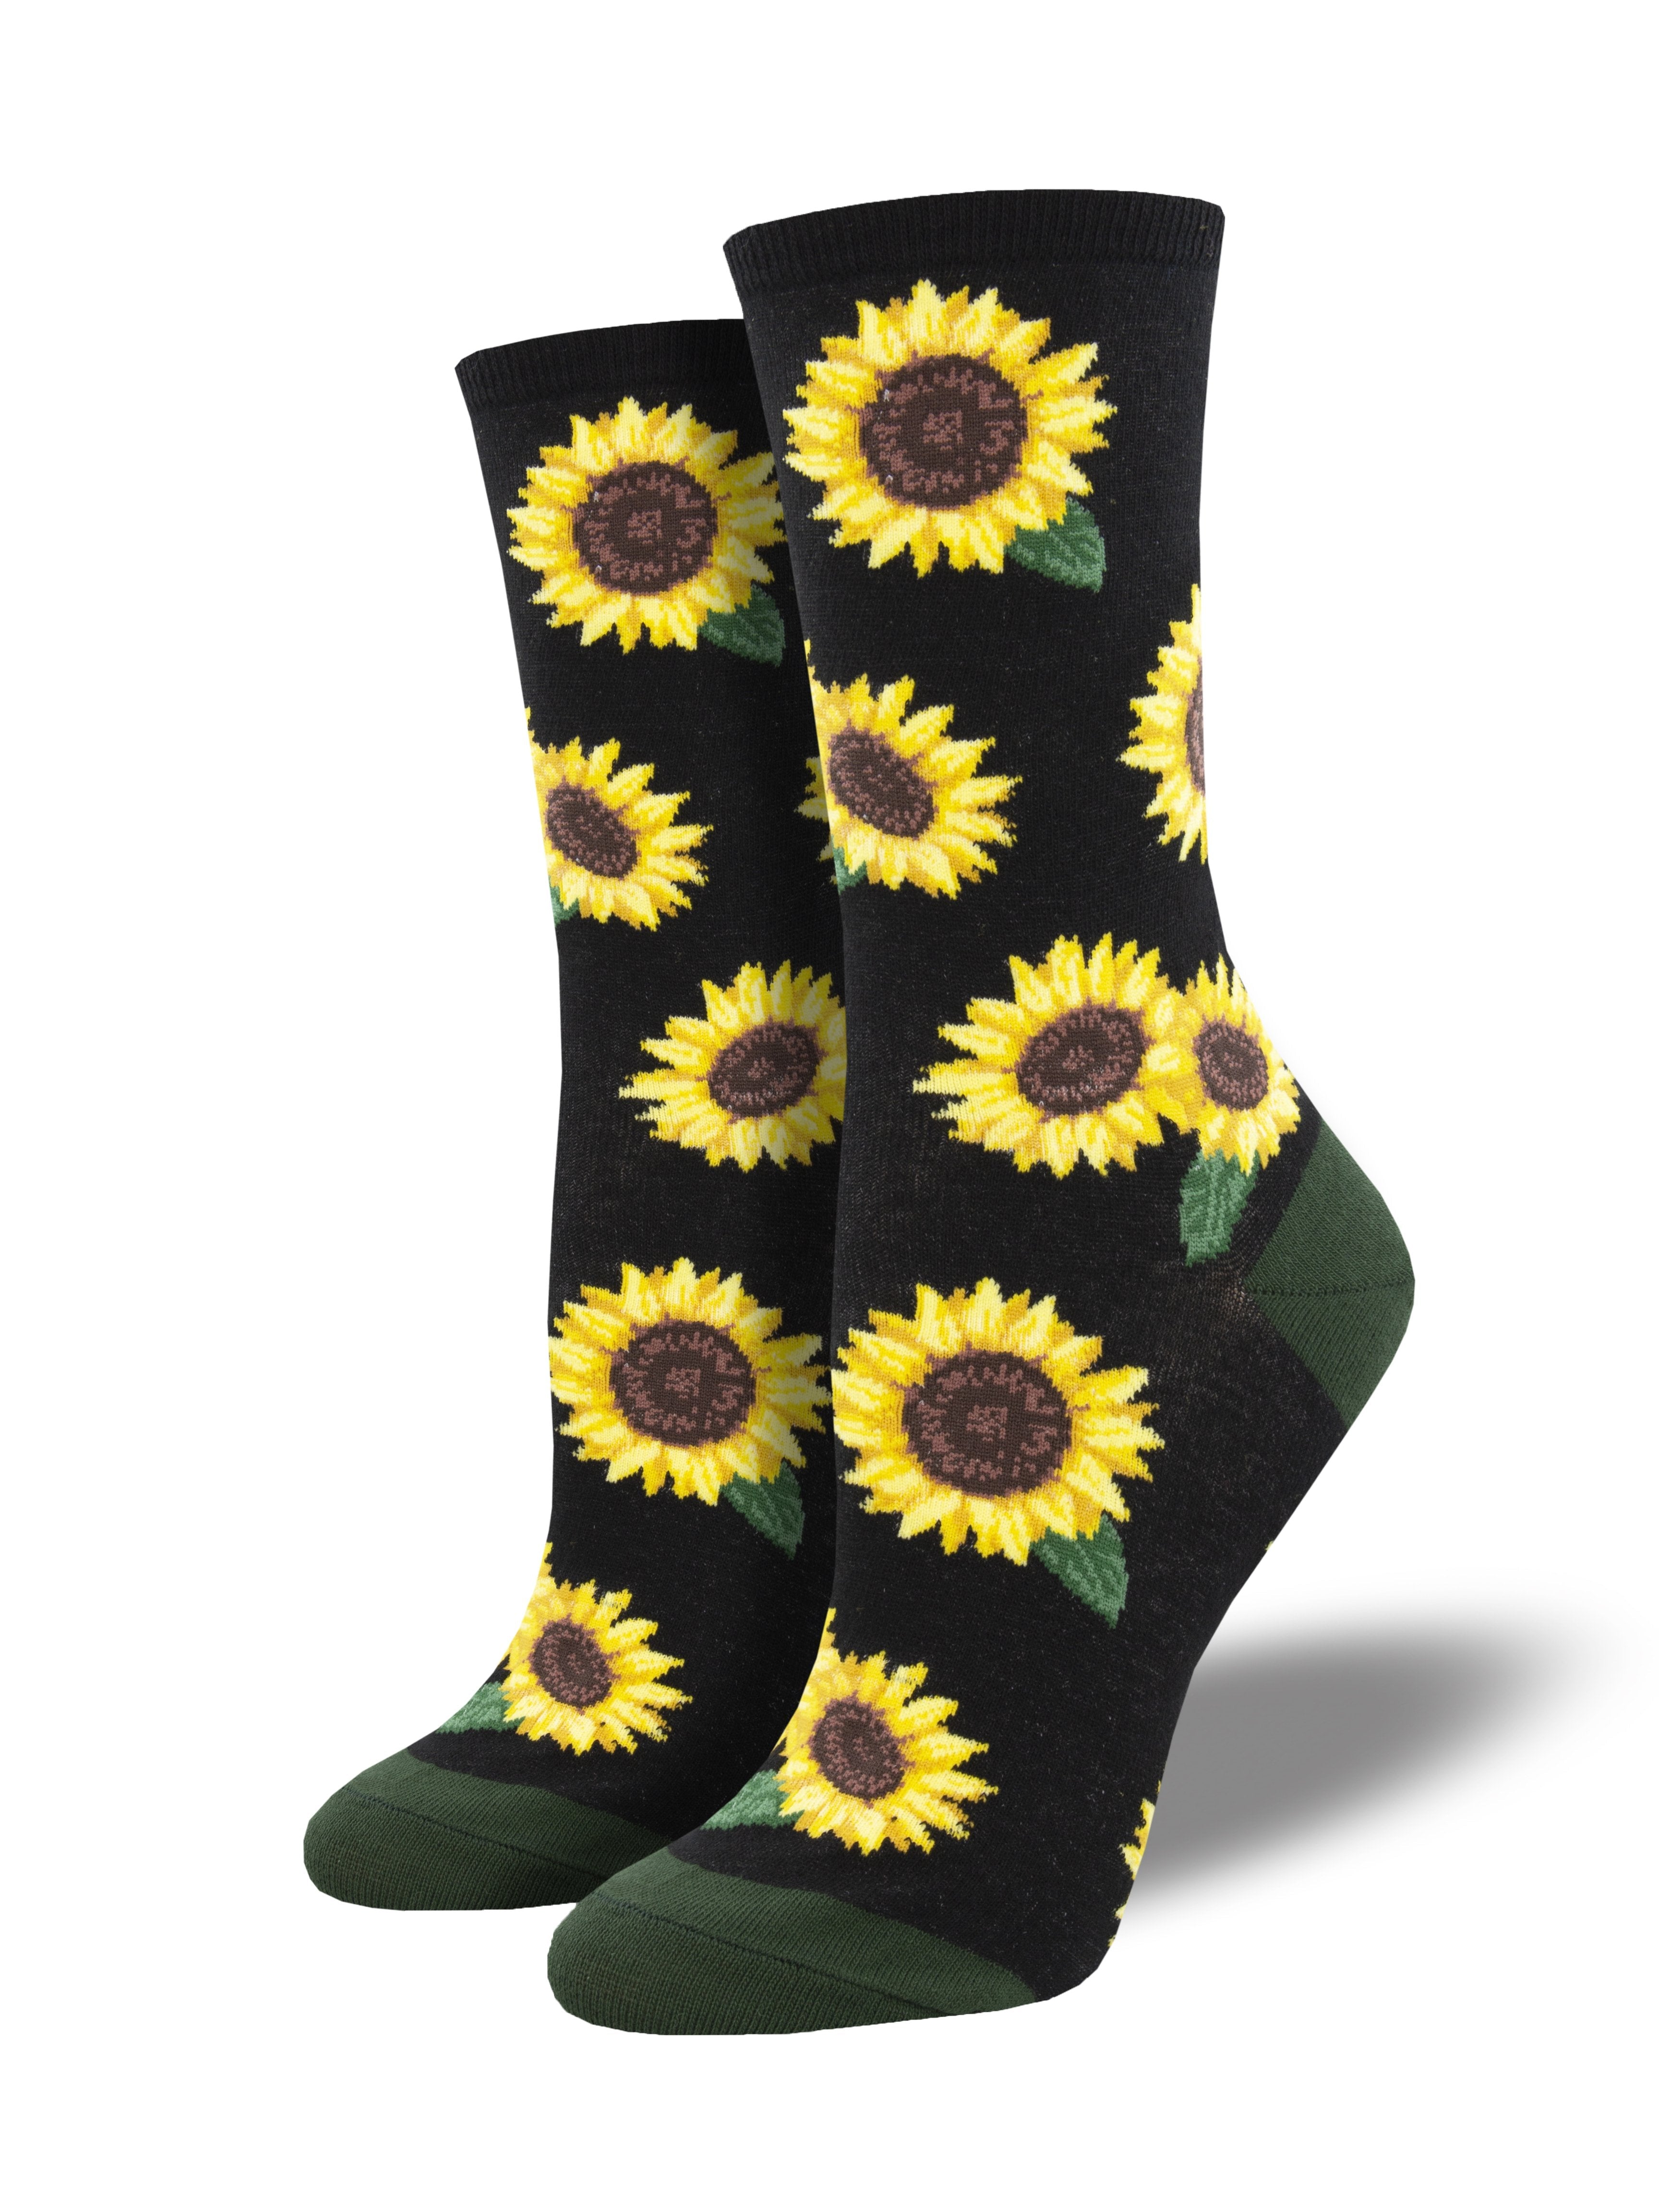 Women's "More Blooming" Socks" Socks